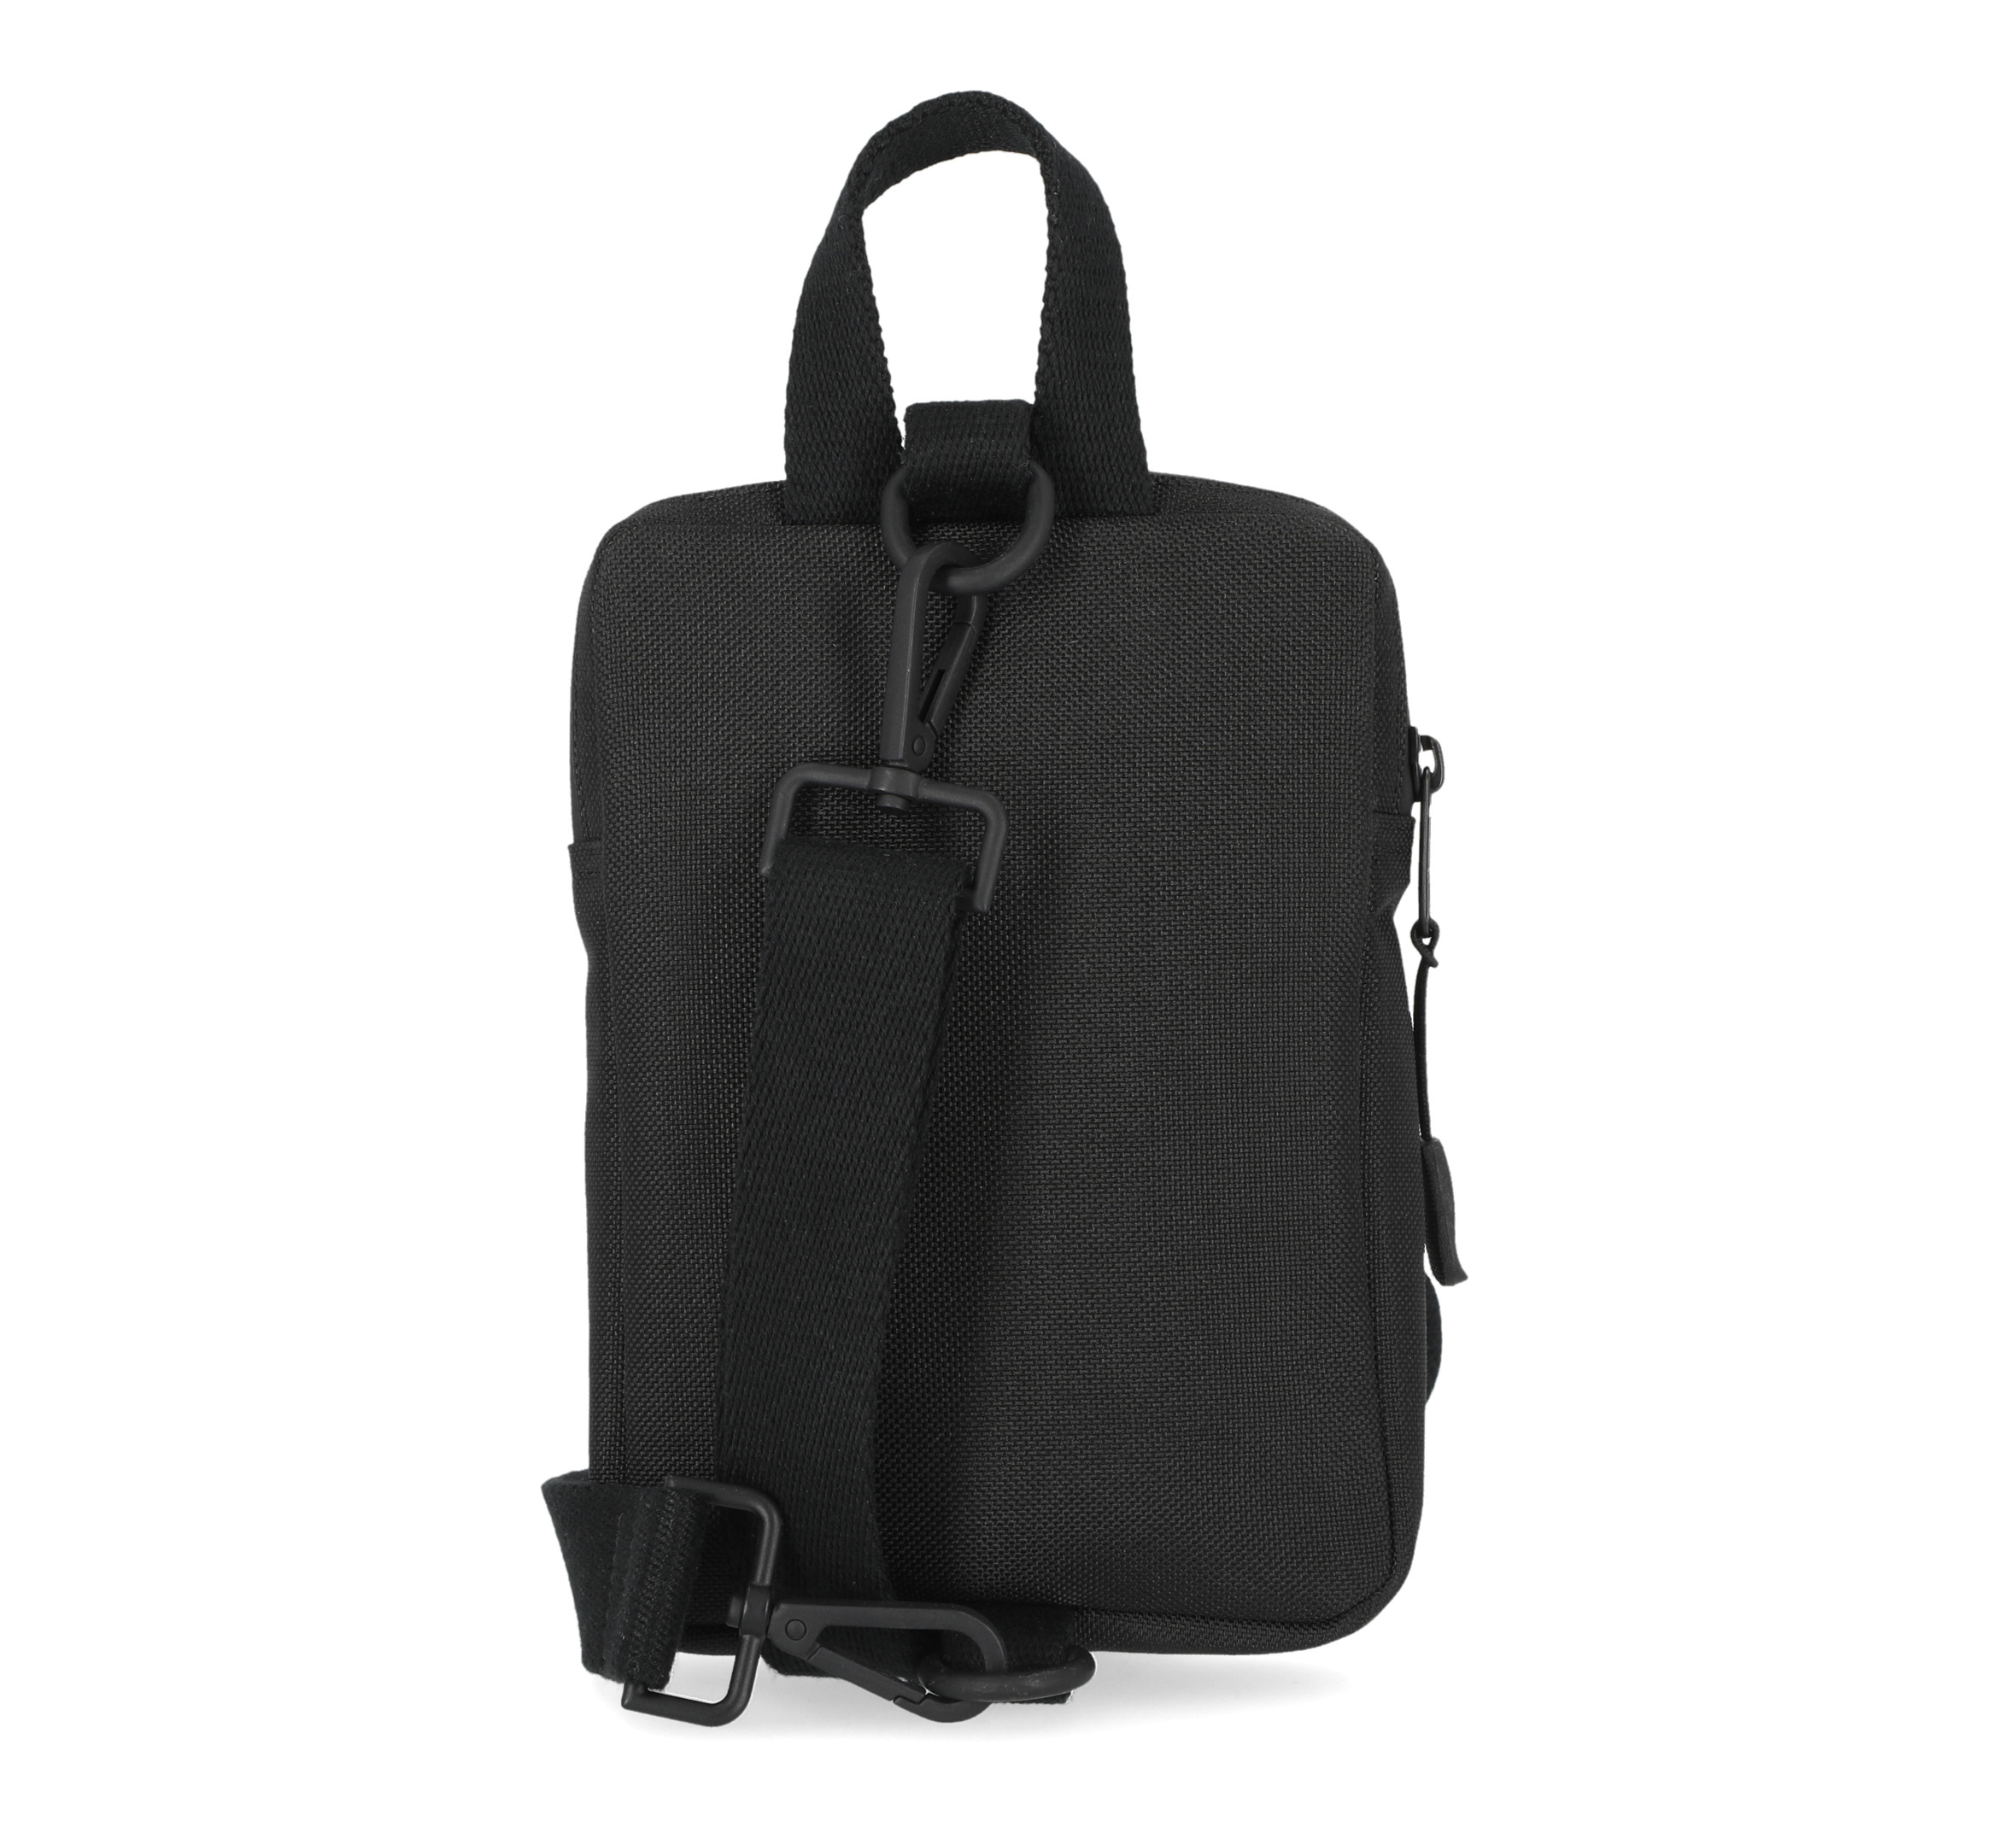 Harley-Davidson Black Leather Logo Mini Convertible Backpack Purse Bag |  Convertible backpack purse, Backpack purse, Leather